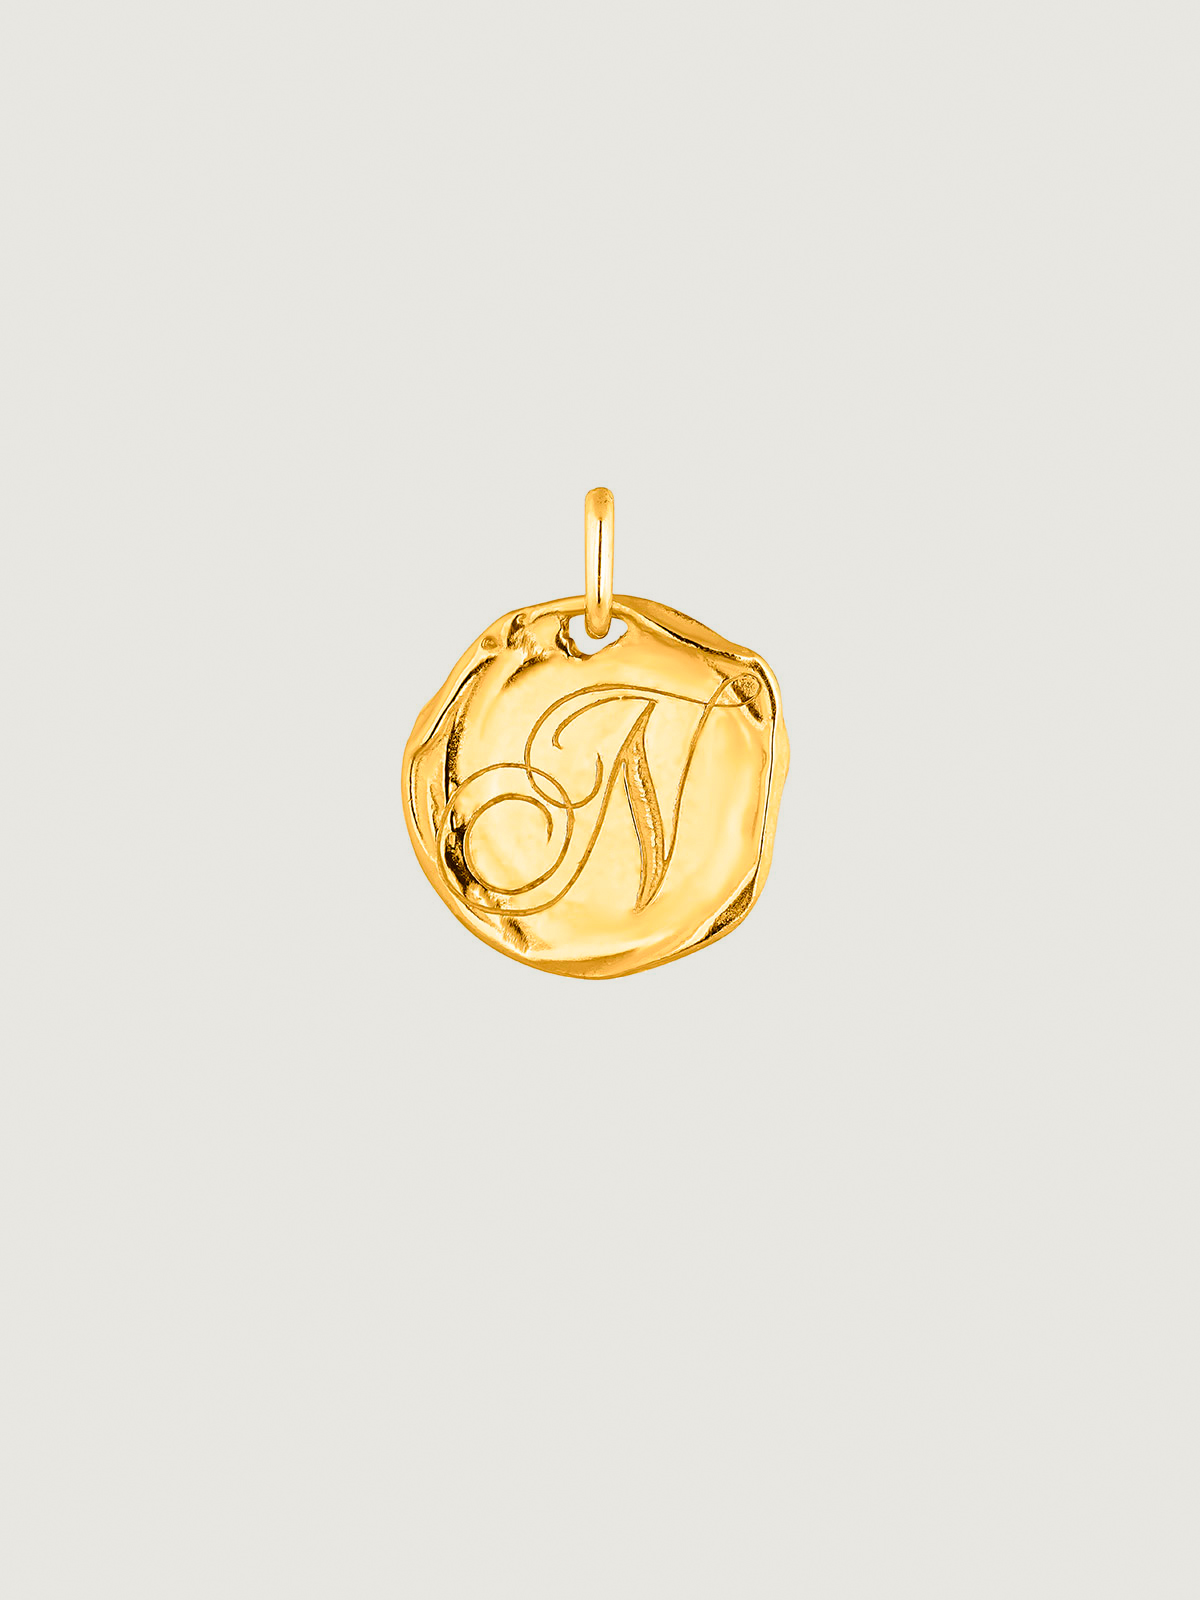 Charm artesanal de plata 925 bañada en oro amarillo de 18K con inicial N